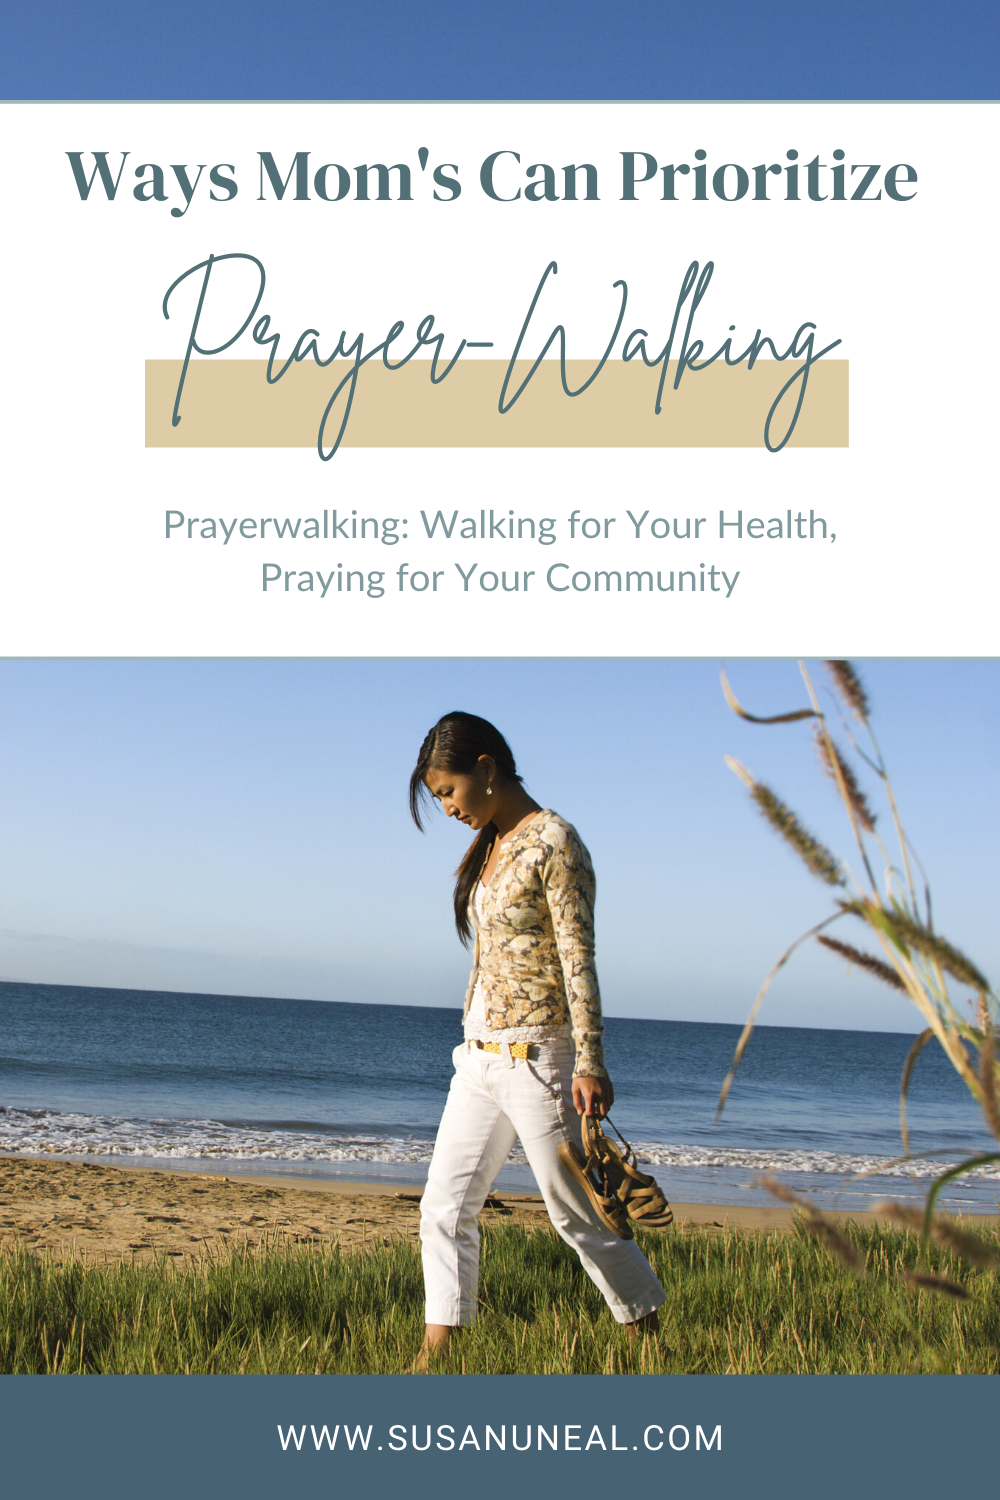 Prayerwalking: Walking for Your Health, Praying for Your Community